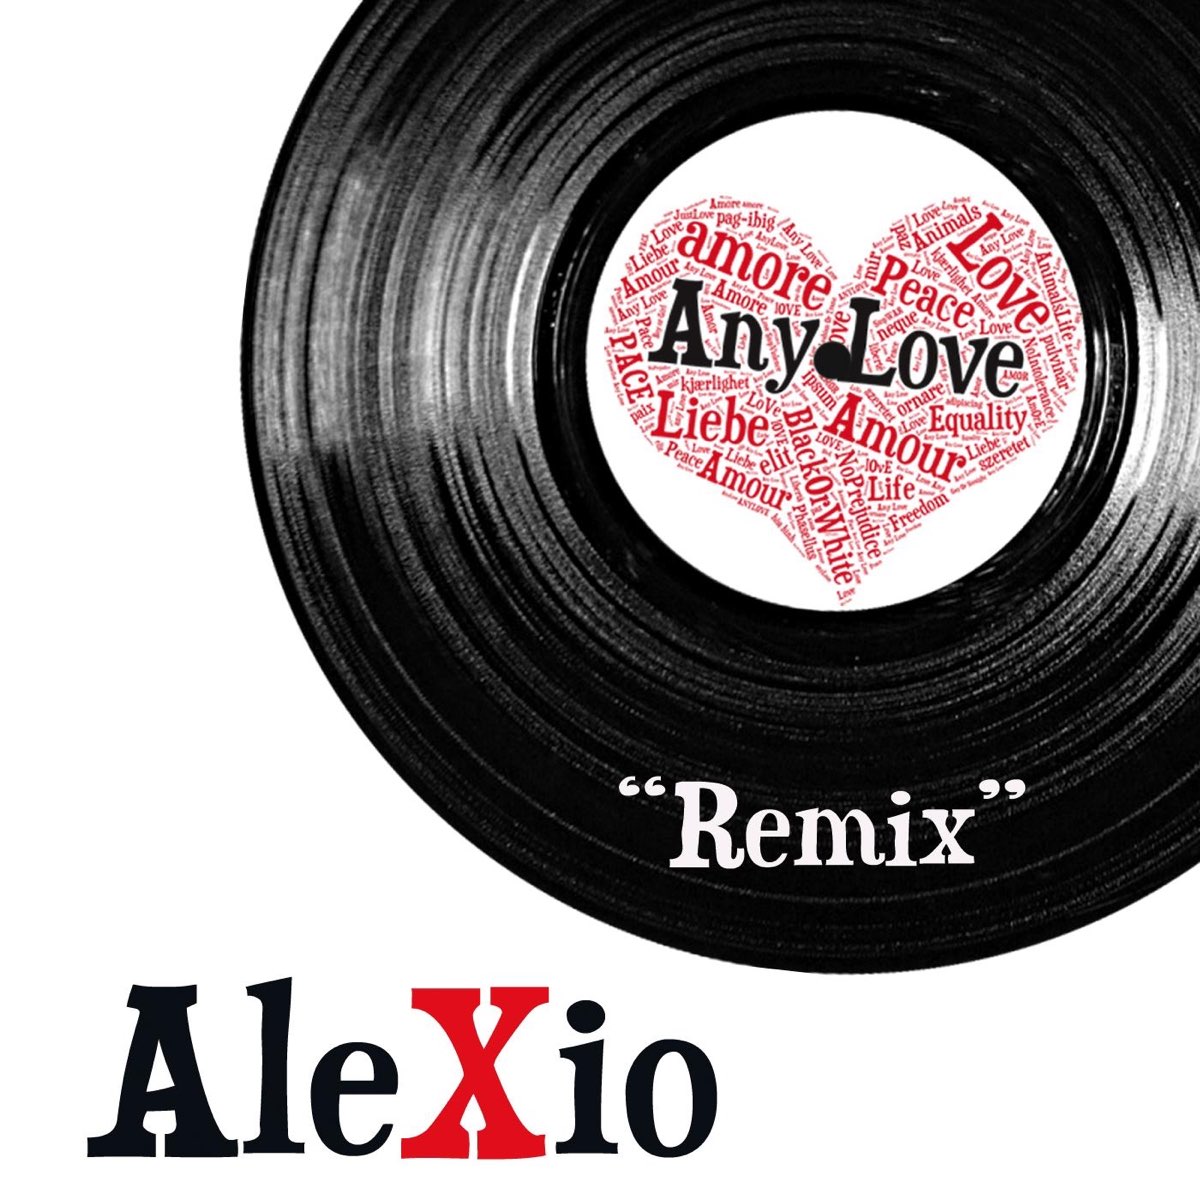 Lets love remix. Love Remix. Lovely песня ремикс. Любимые Remix. Any Love.